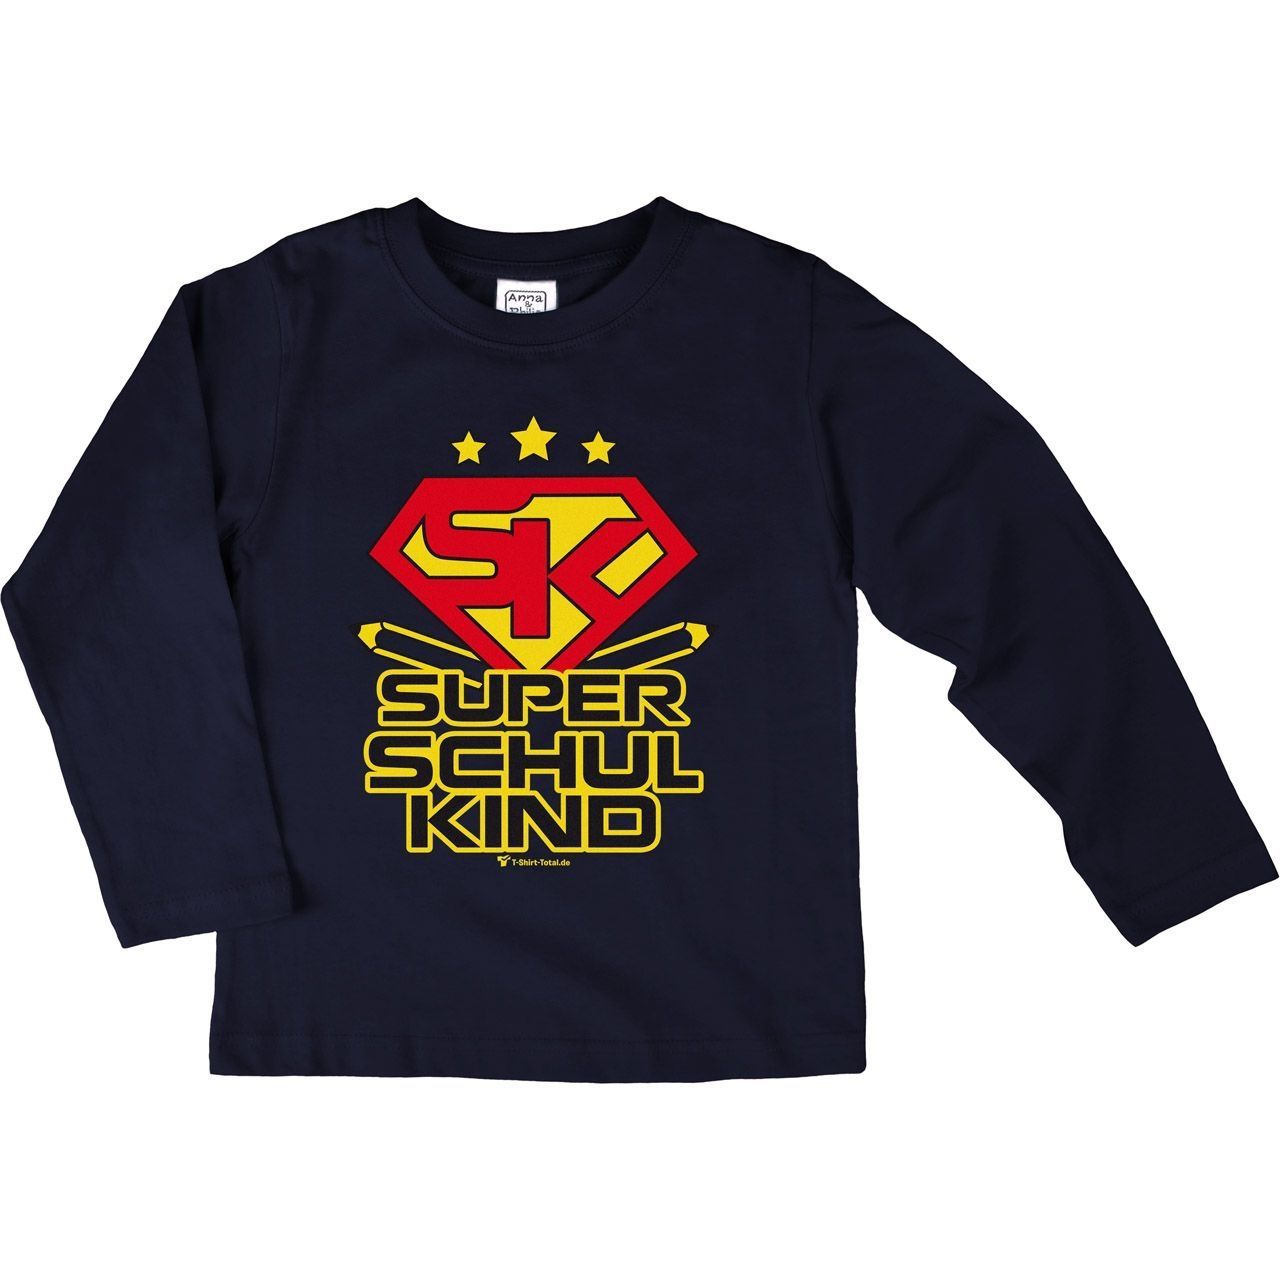 Super Schulkind Kinder Langarm Shirt navy 134 / 140